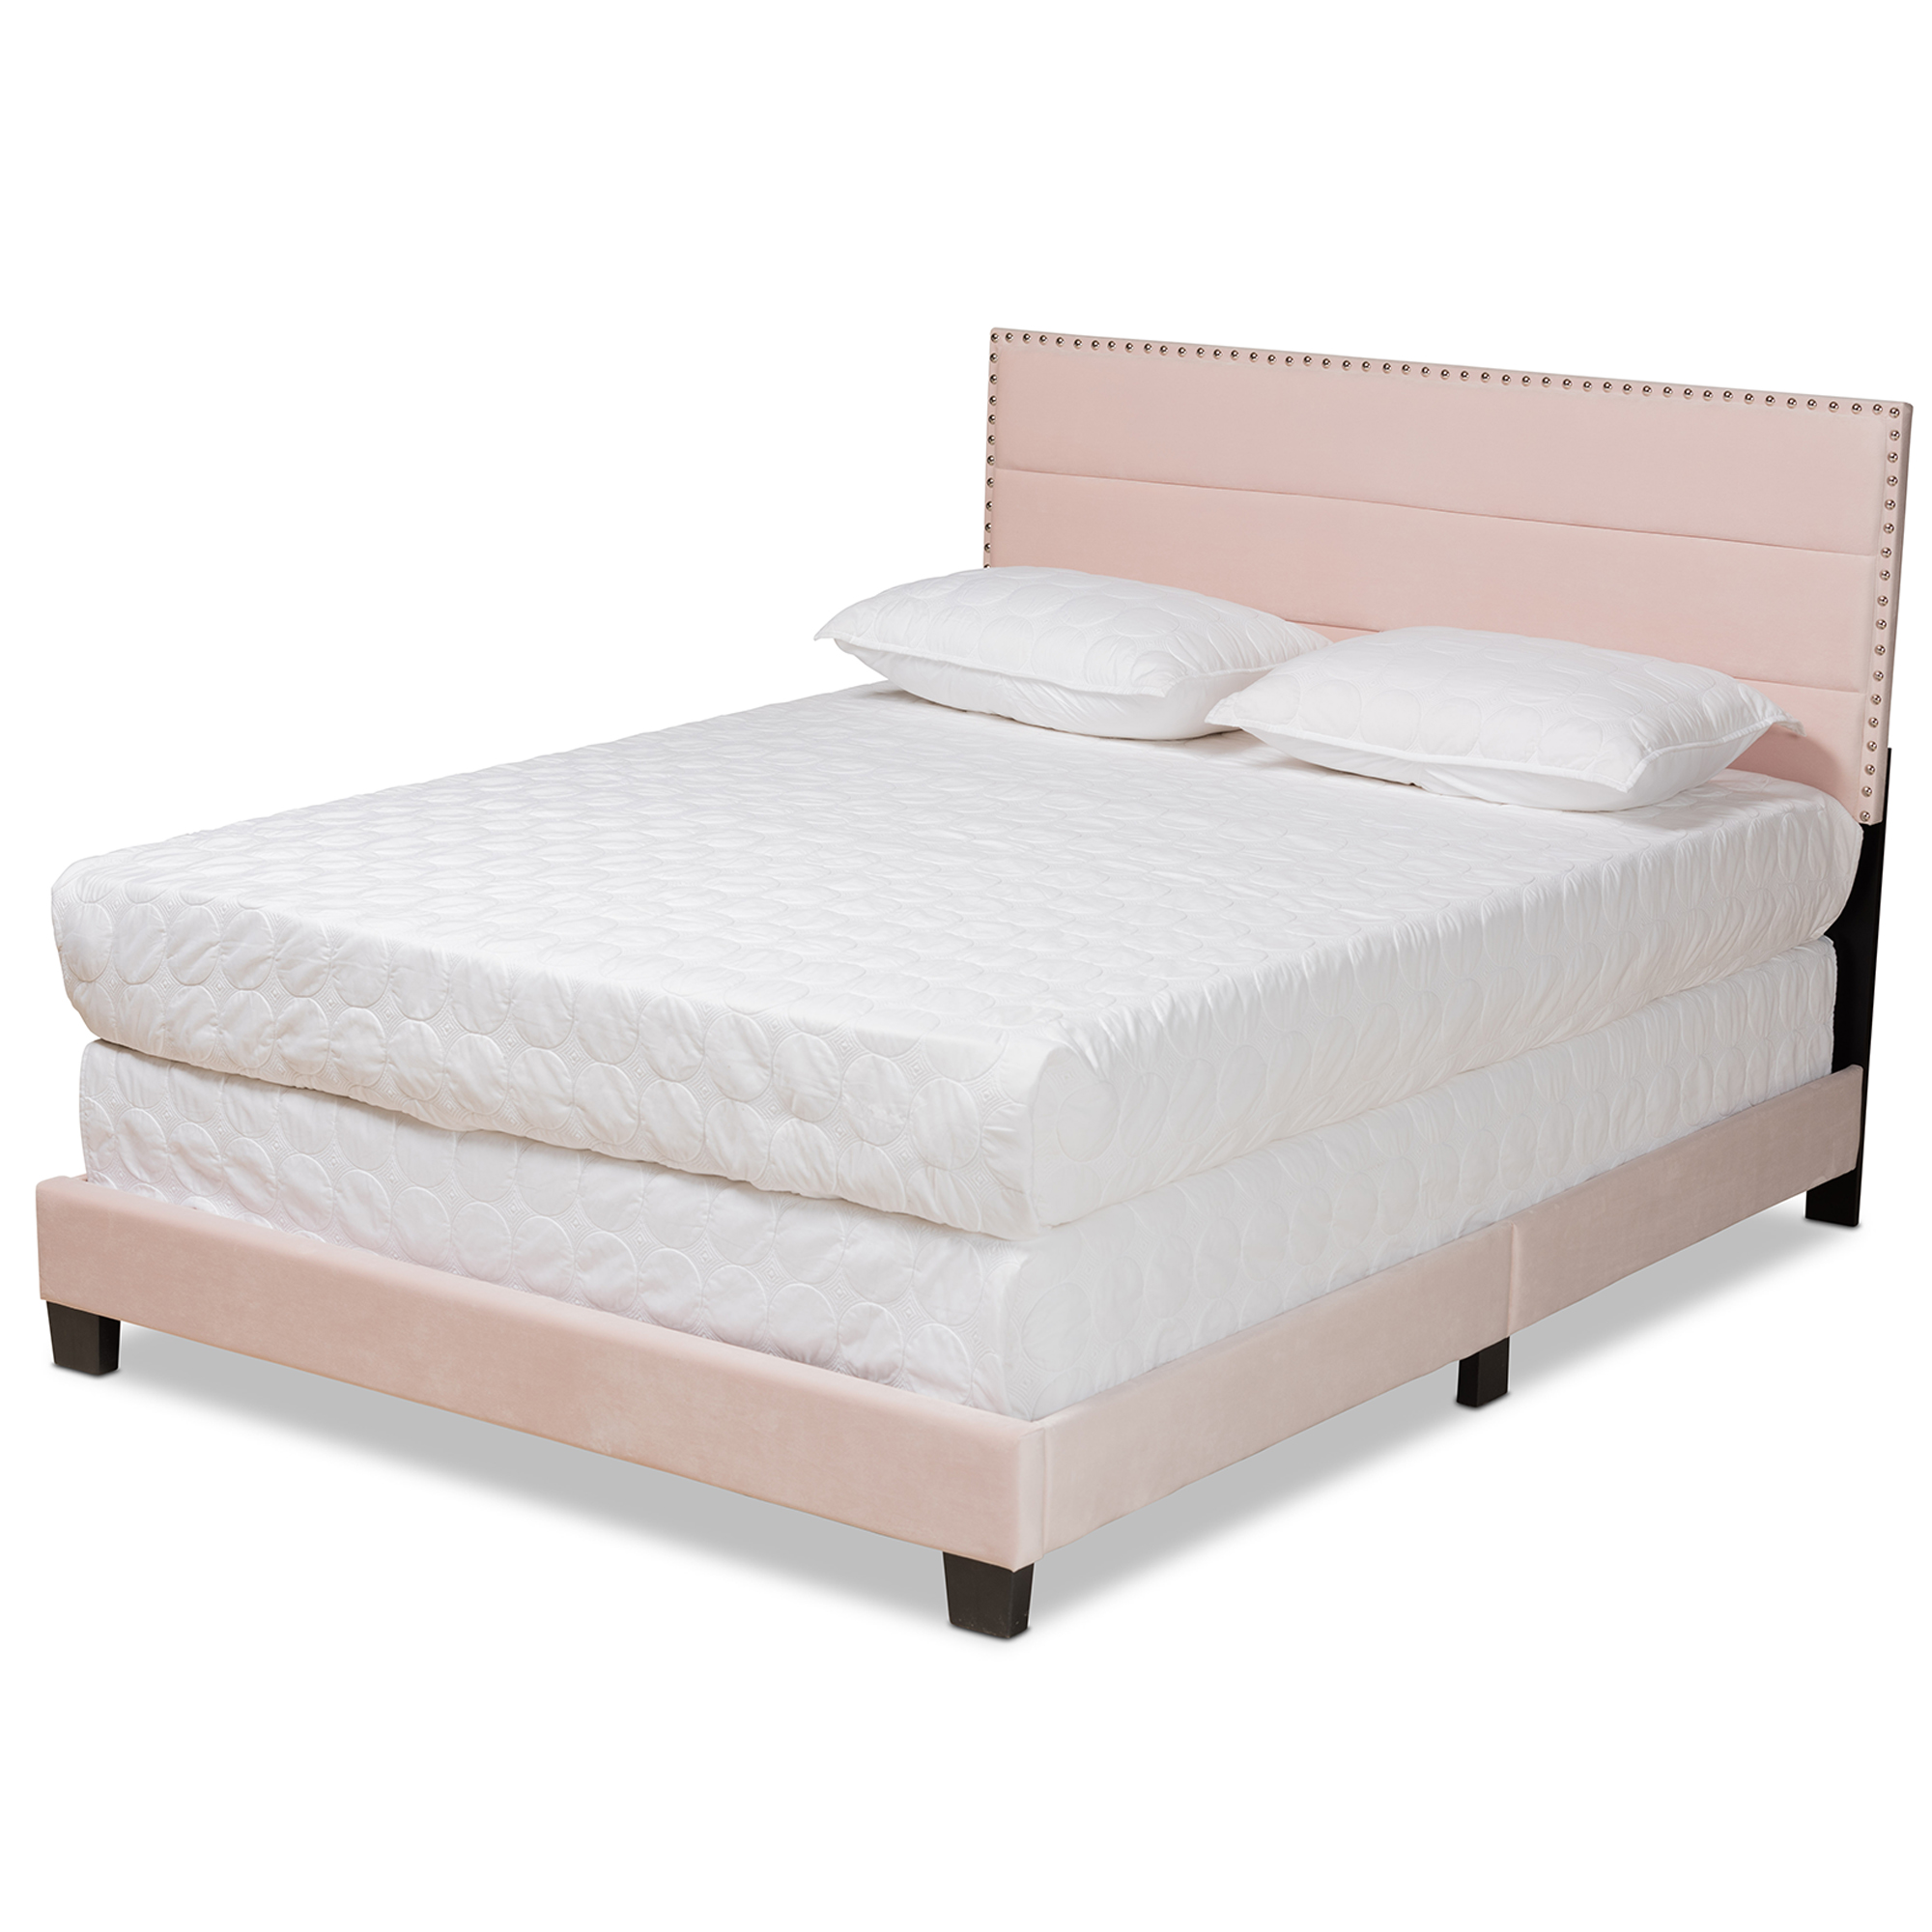 Baxton Studio Tamira Modern and Contemporary Glam Light Pink Velvet Fabric Upholstered Full Size Panel Bed